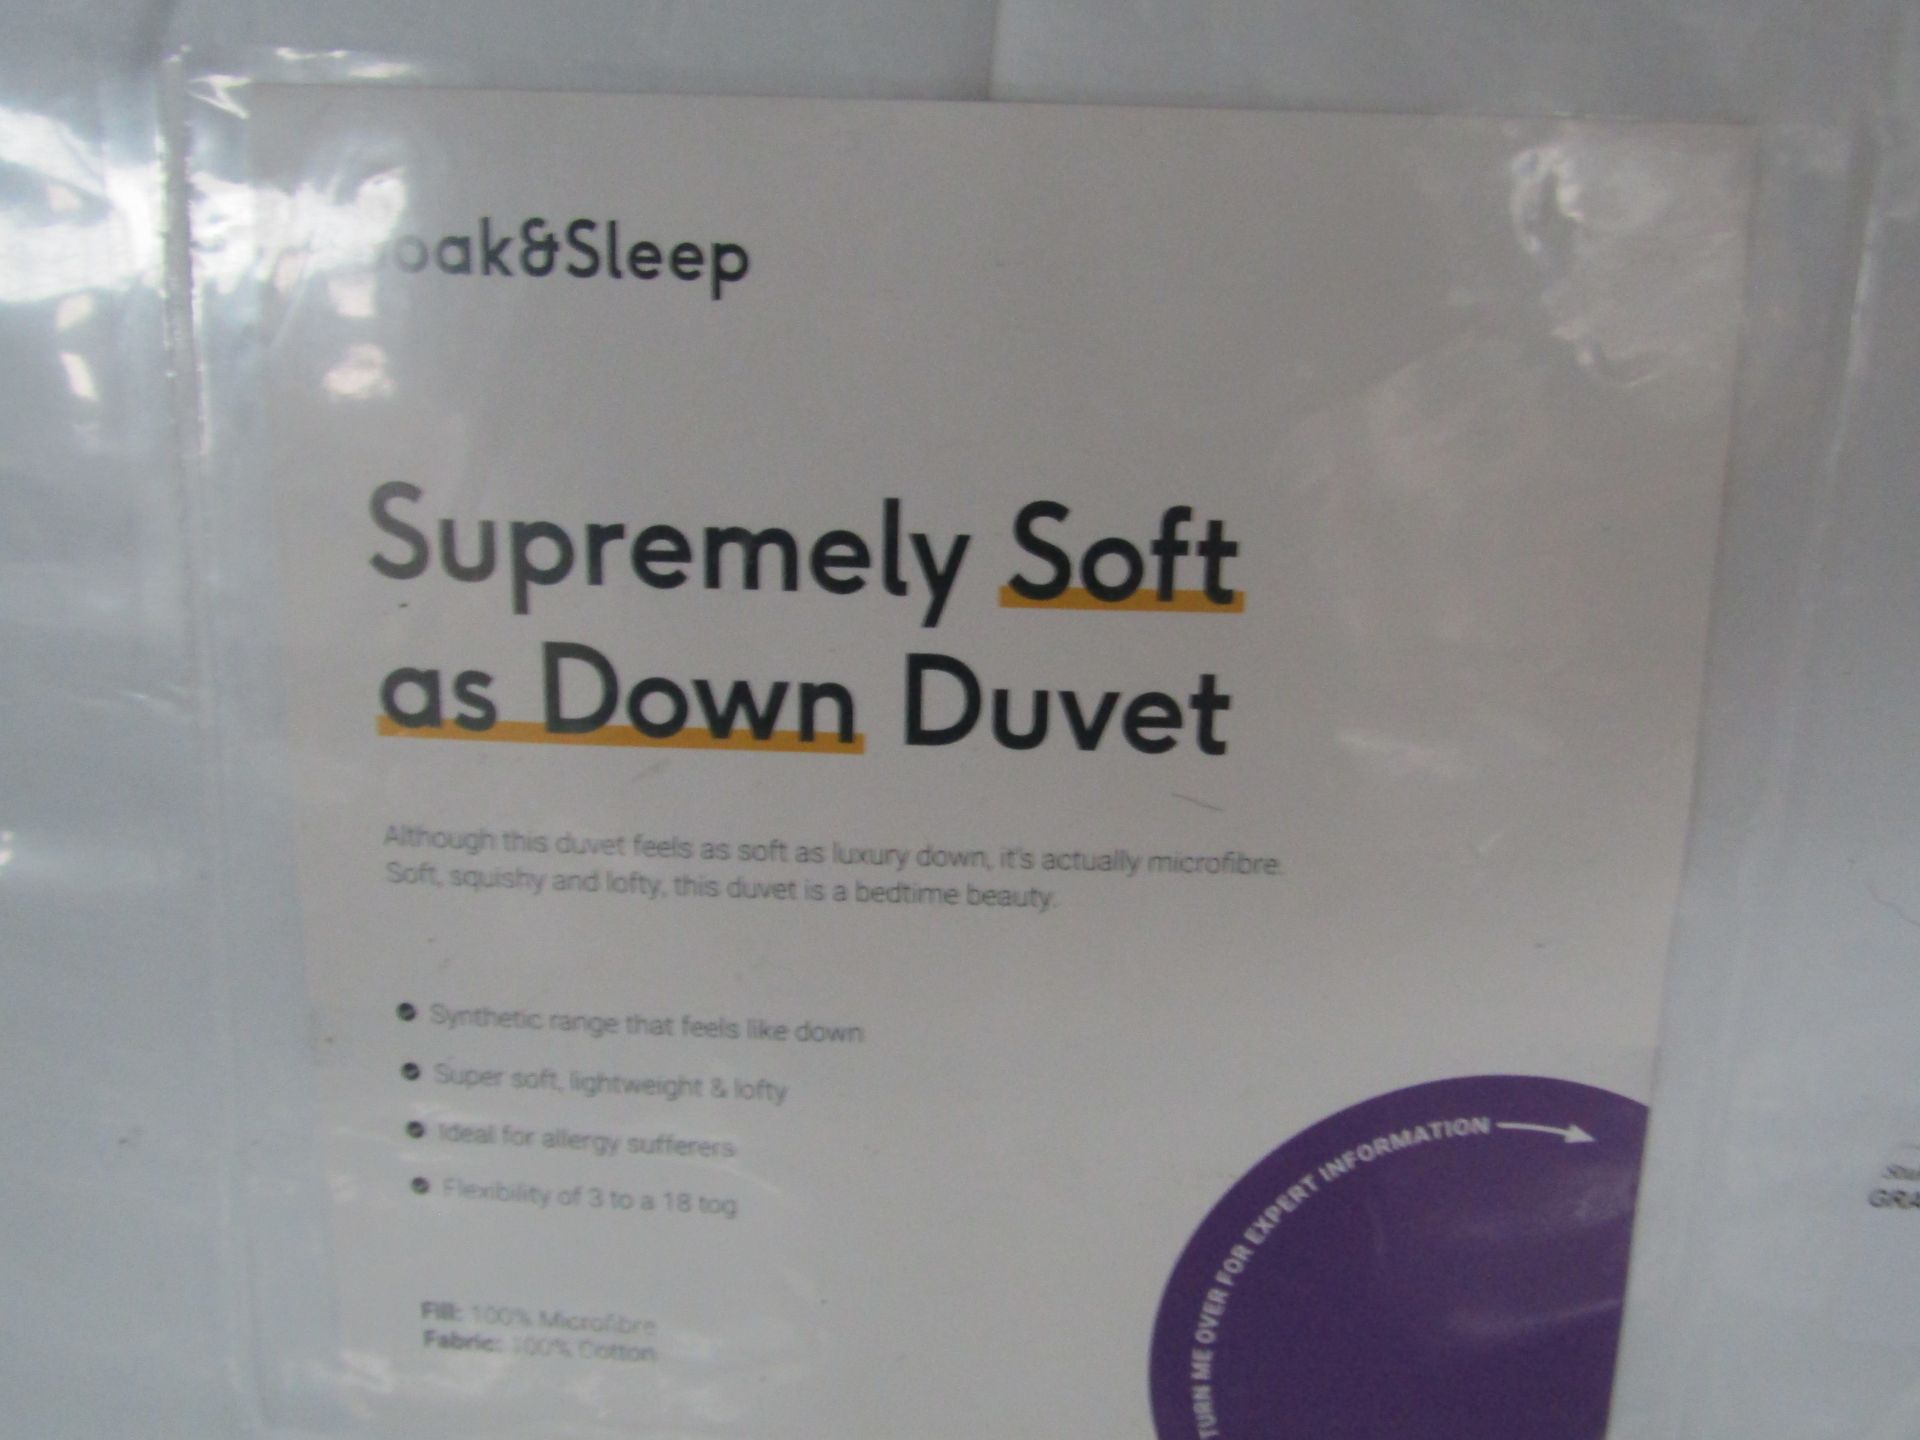 Soak & Sleep Supremely Soft As Down Duvet - Emperor - All Season RRP 188 - Image 2 of 2